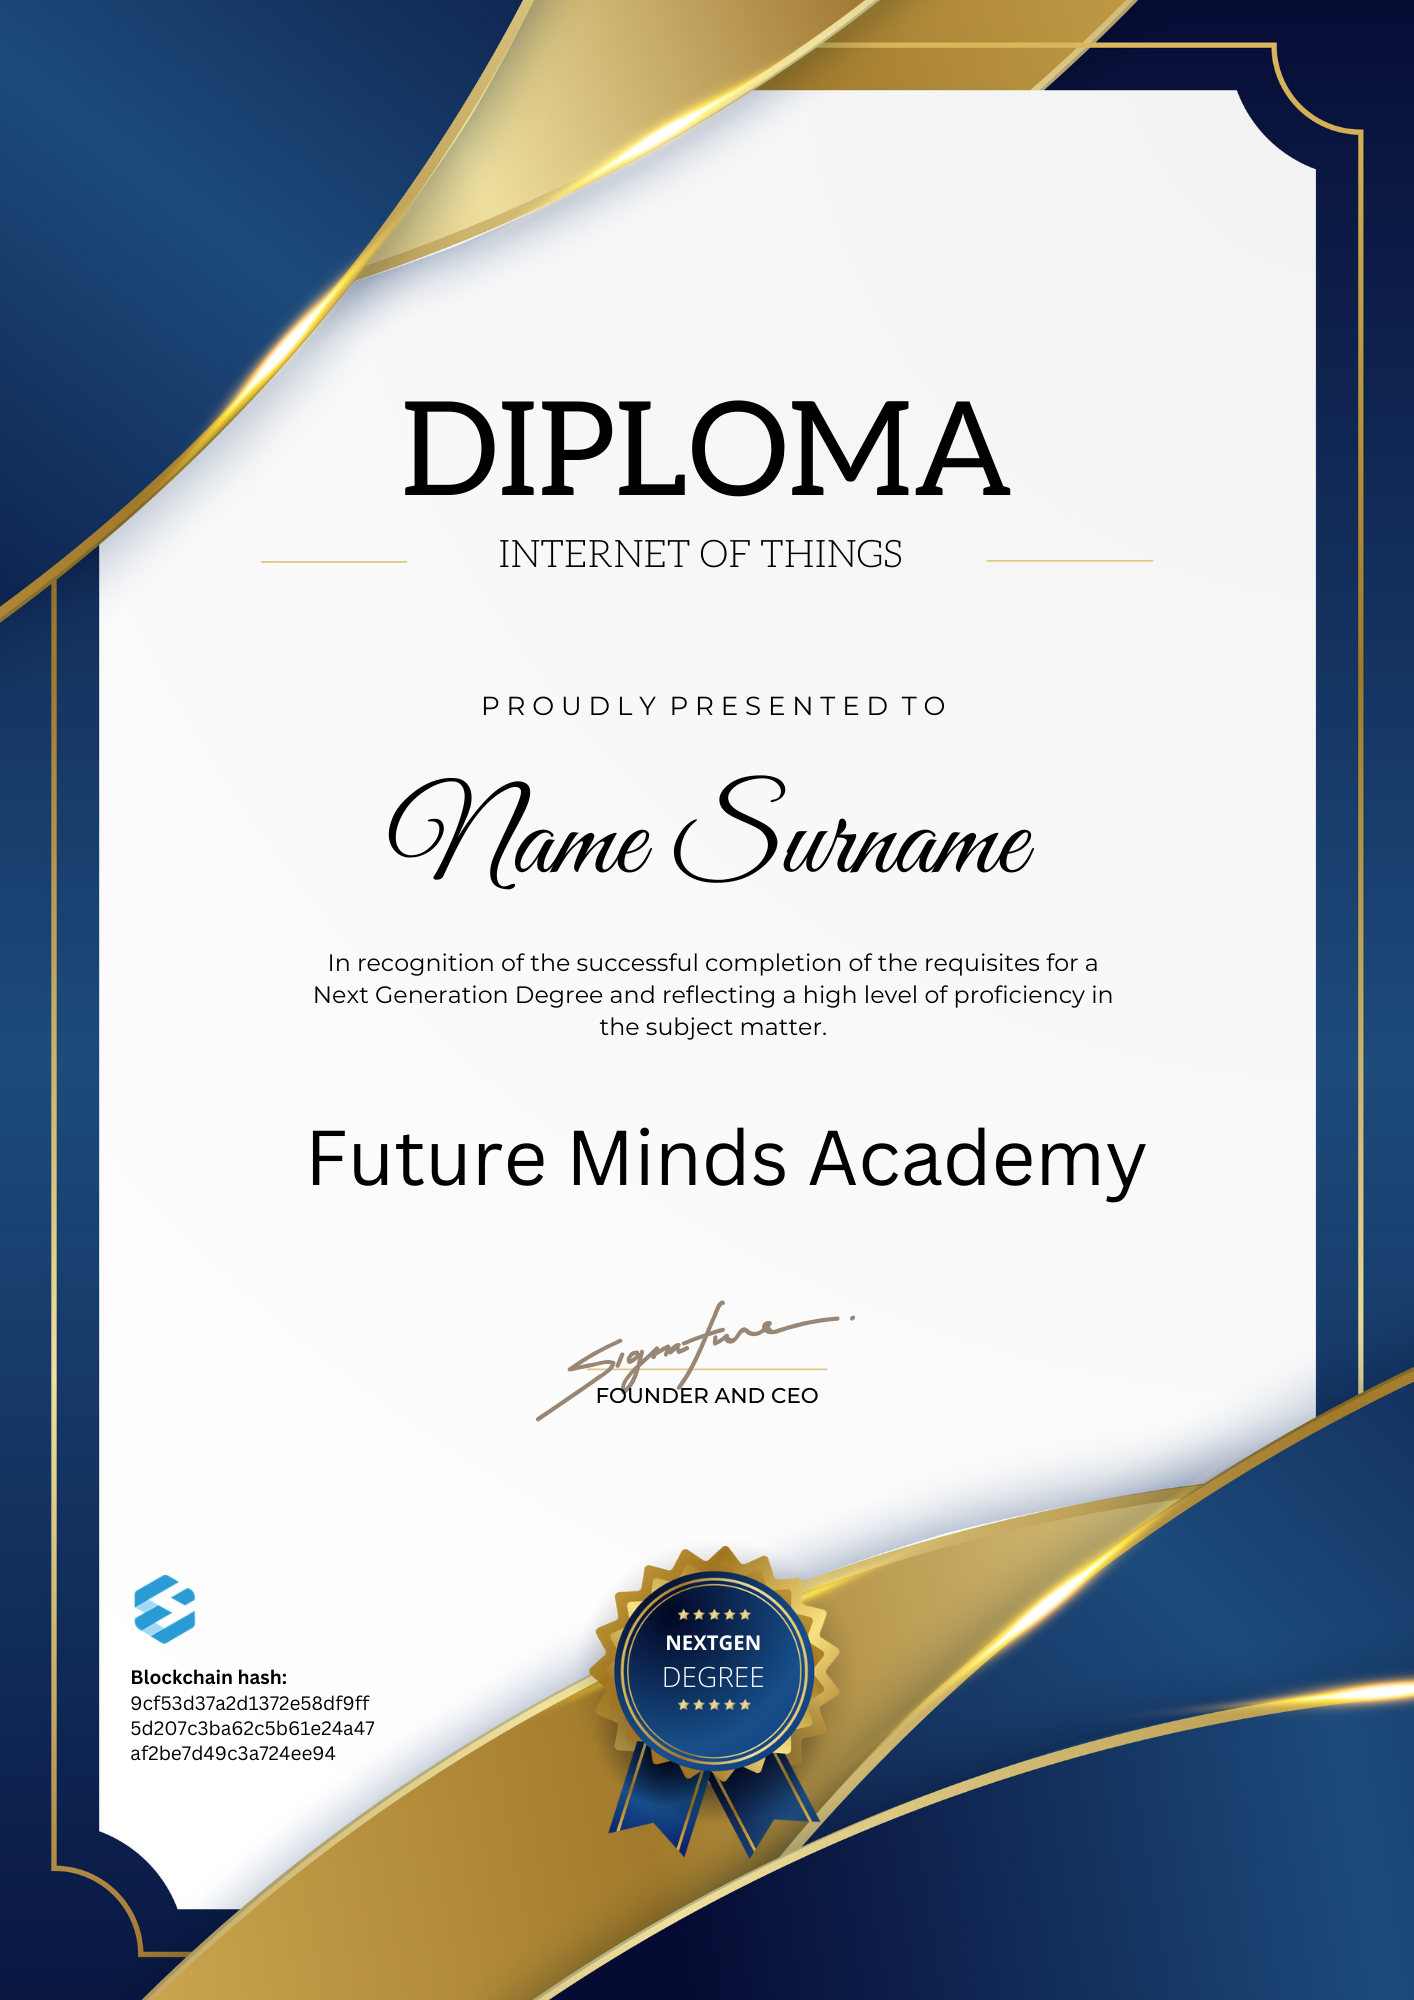 Diploma Internet of Things